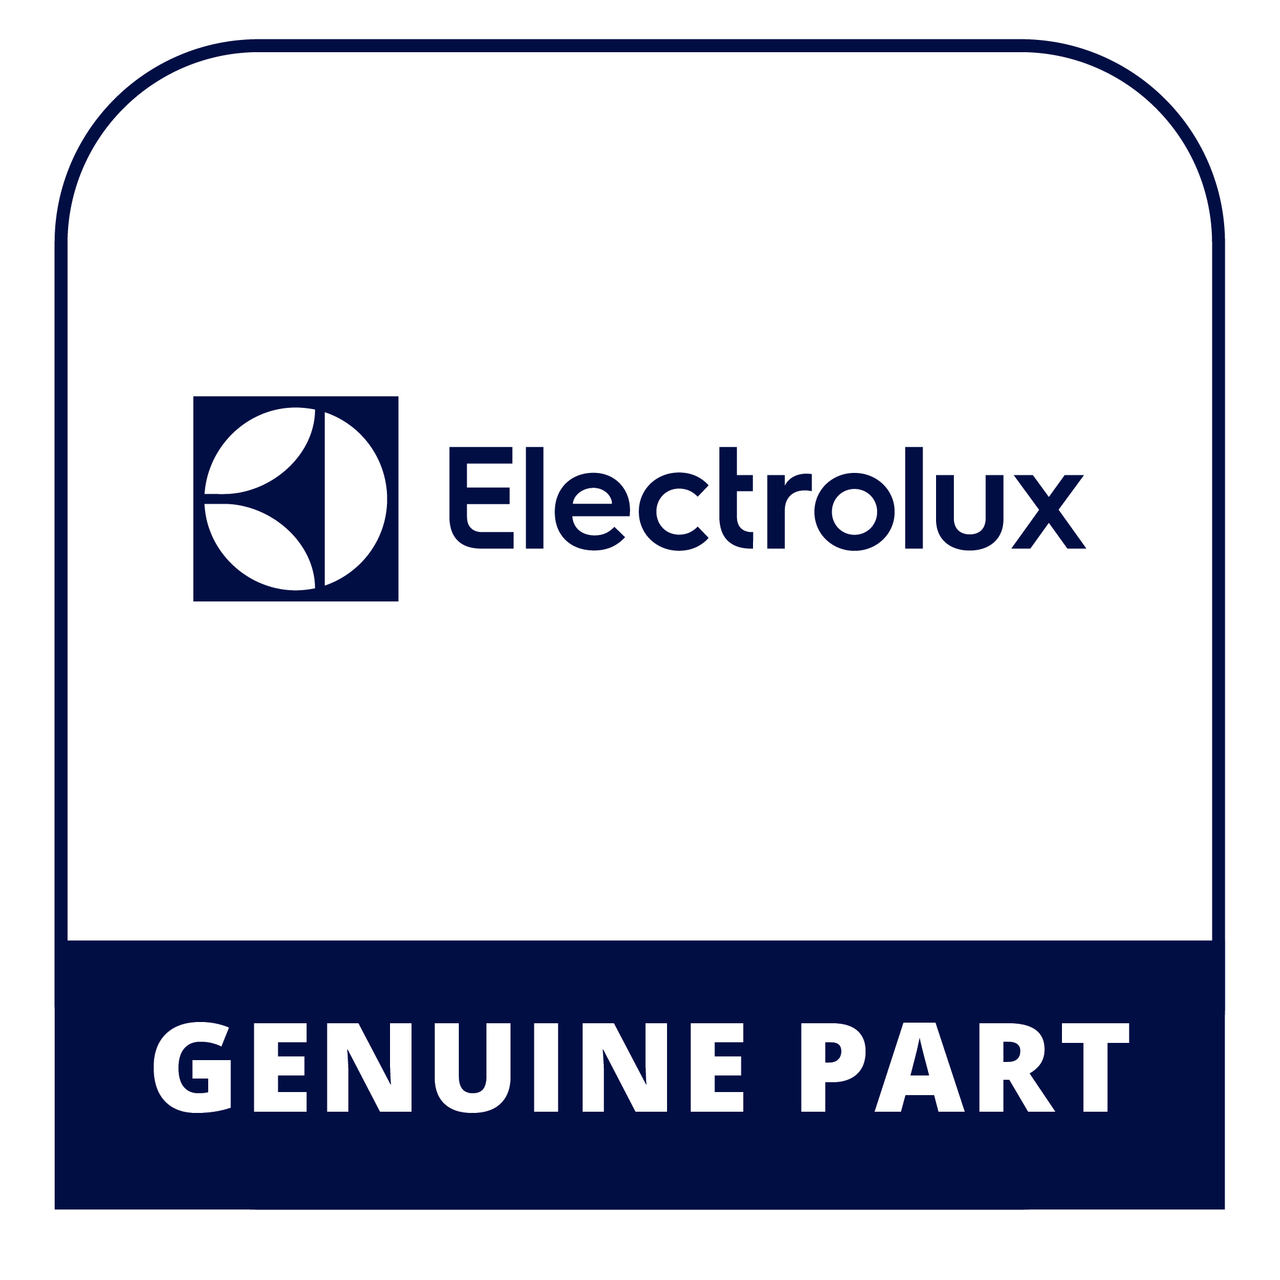 Frigidaire - Electrolux 5304501681 Control Panel - Genuine Electrolux Part